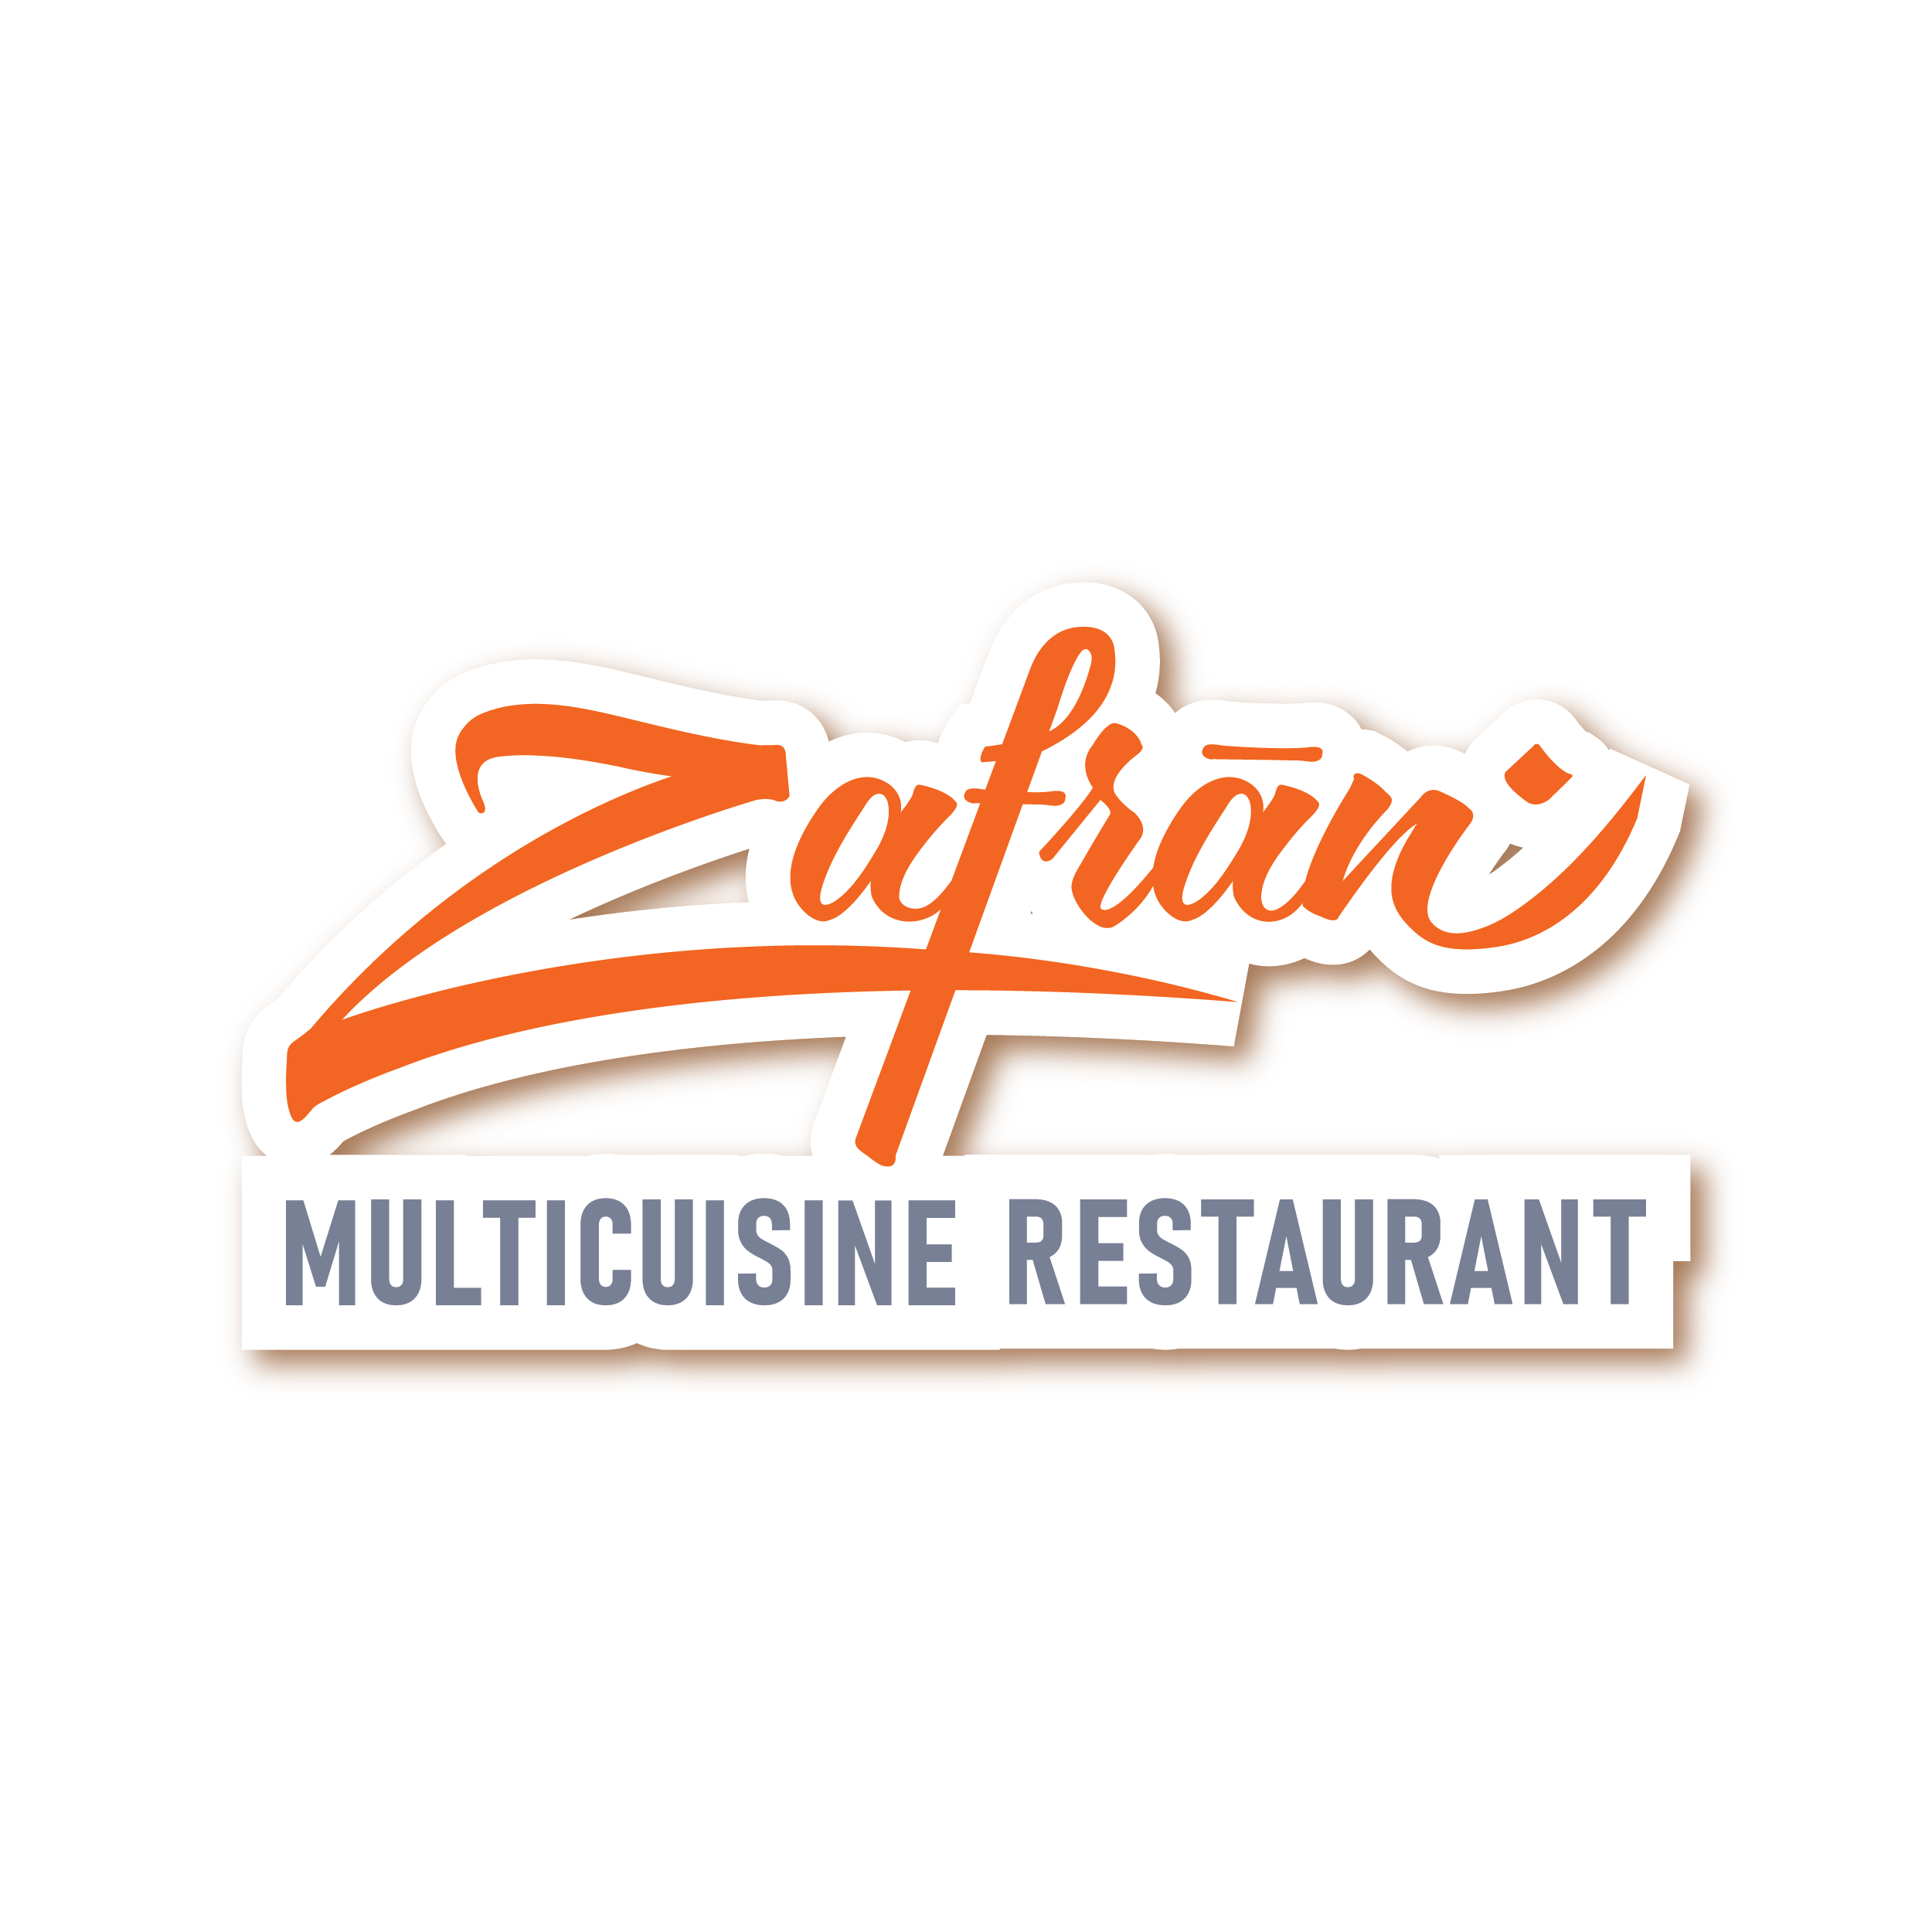 Zafran Restaurant logo